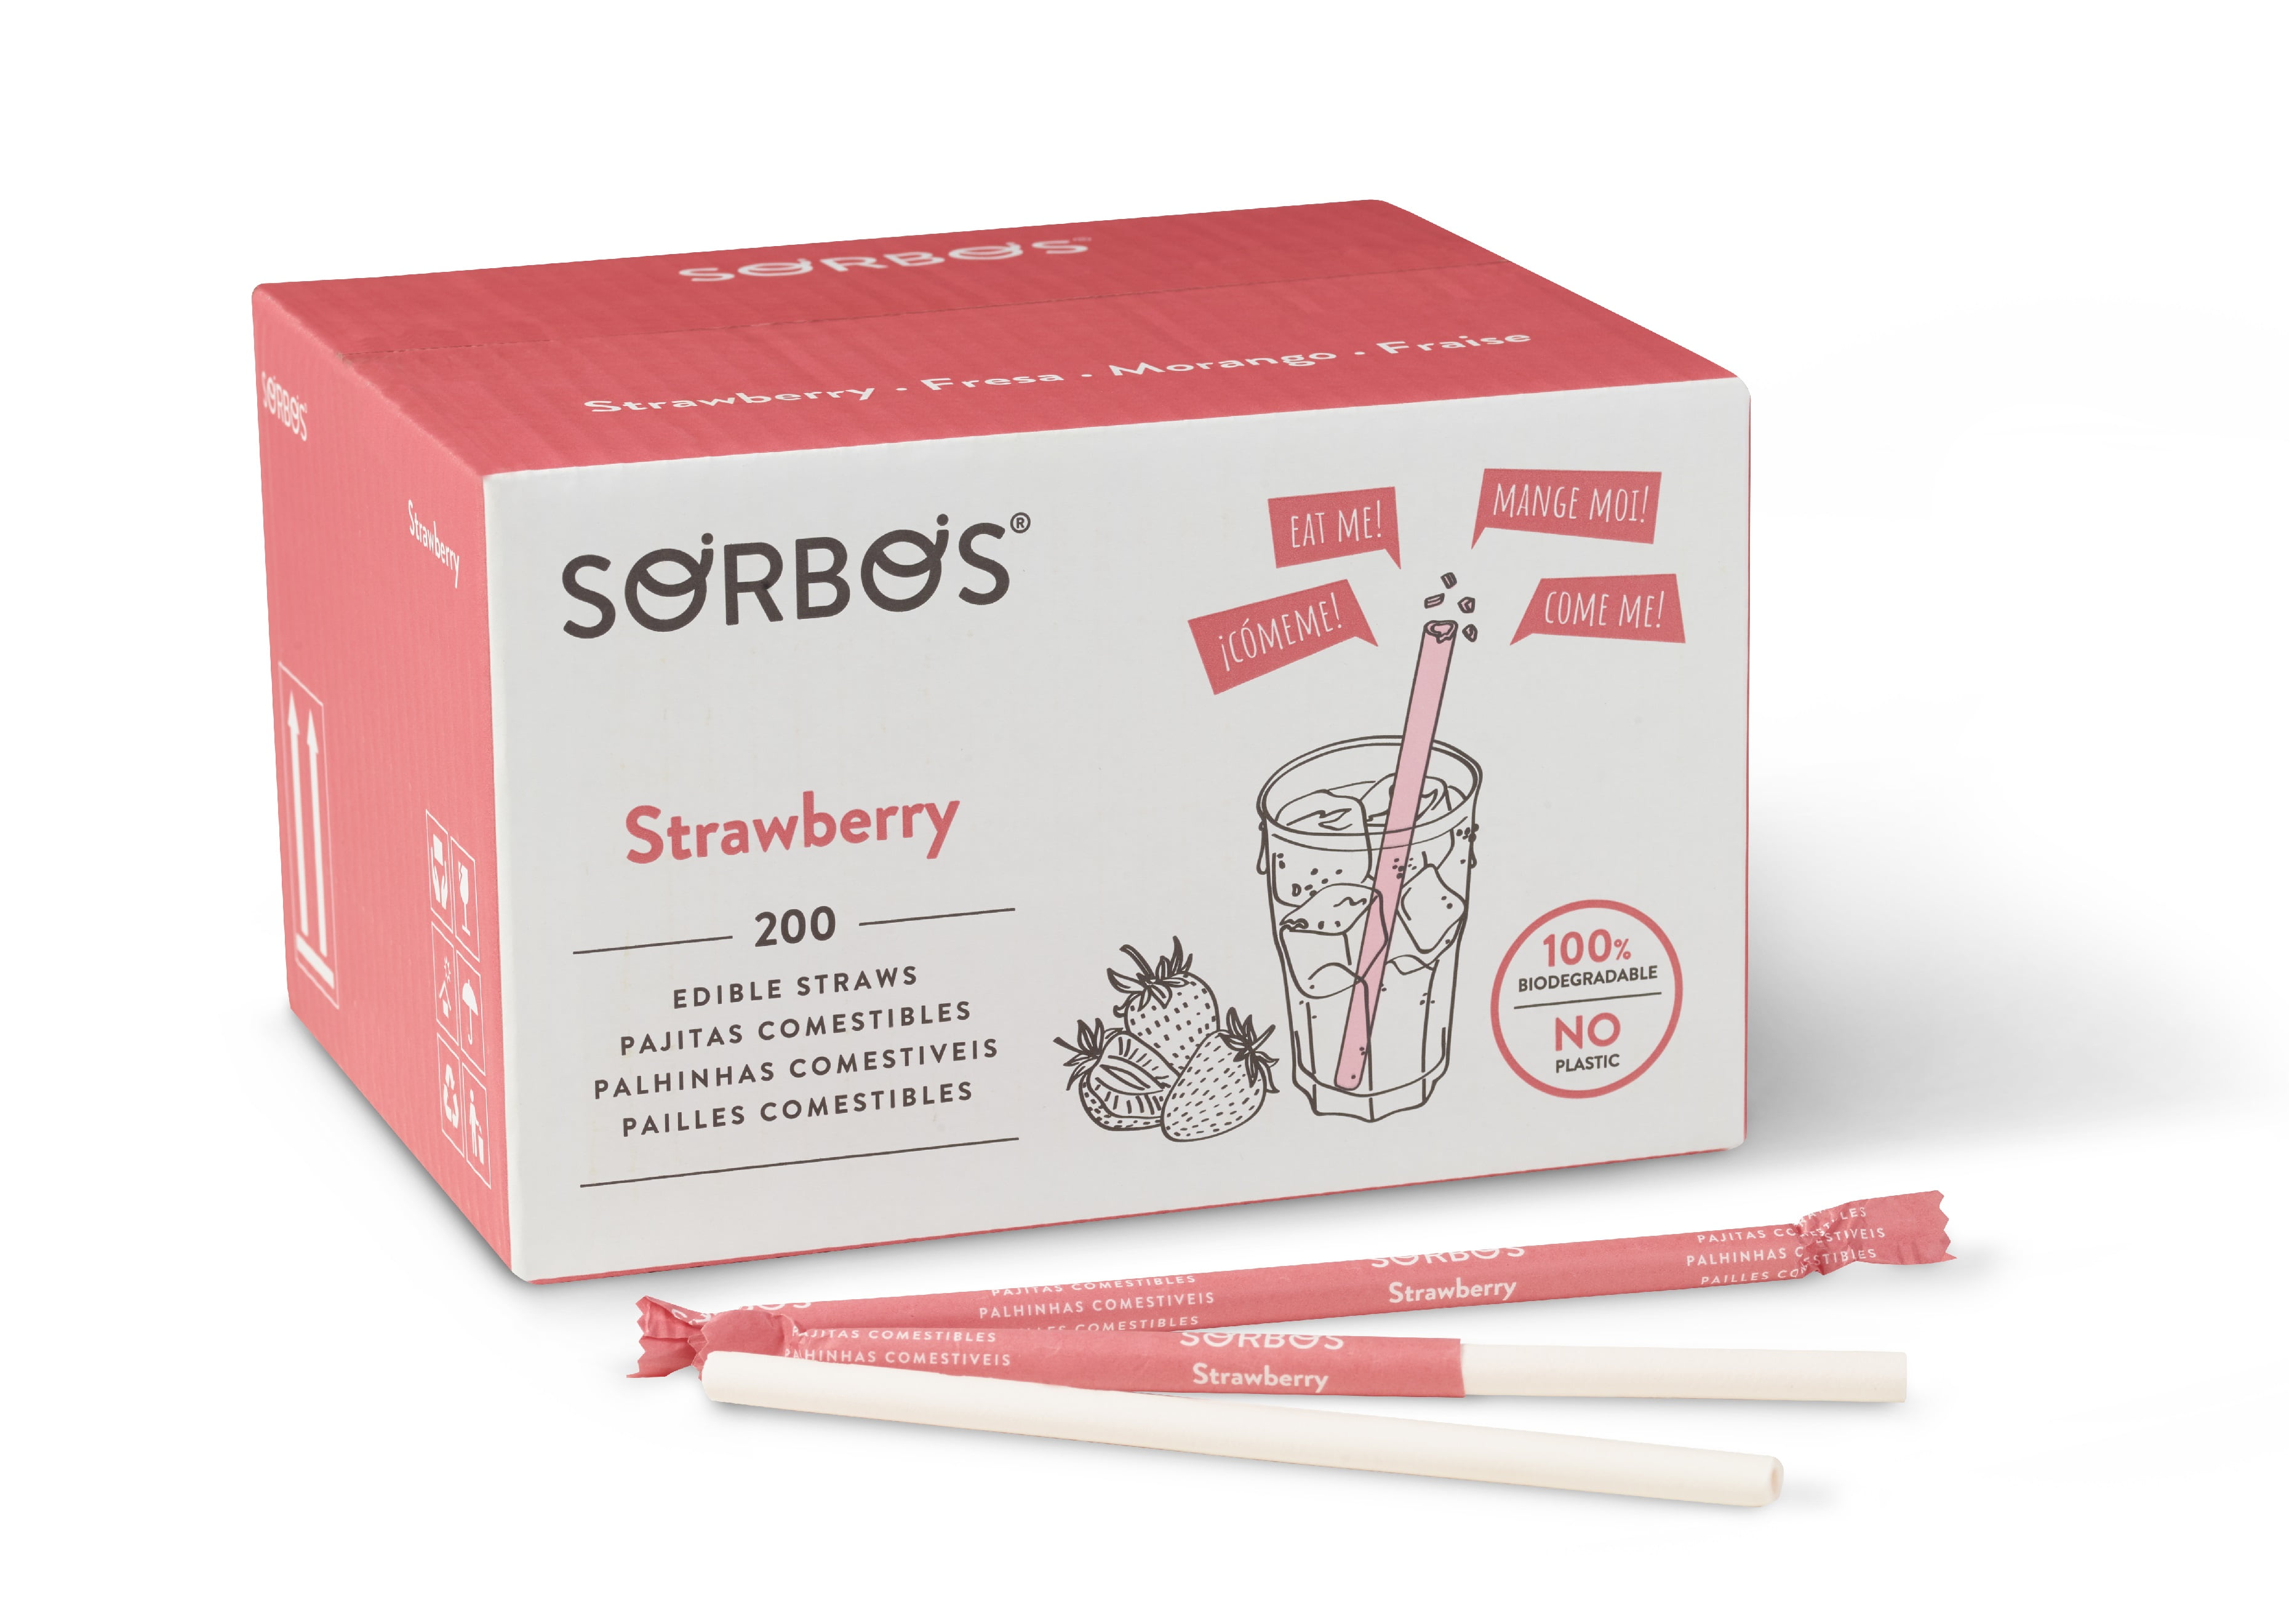  Rubbermaid Litterless Juice Box Replacement Straws, Box of 40  Straws : Health & Household